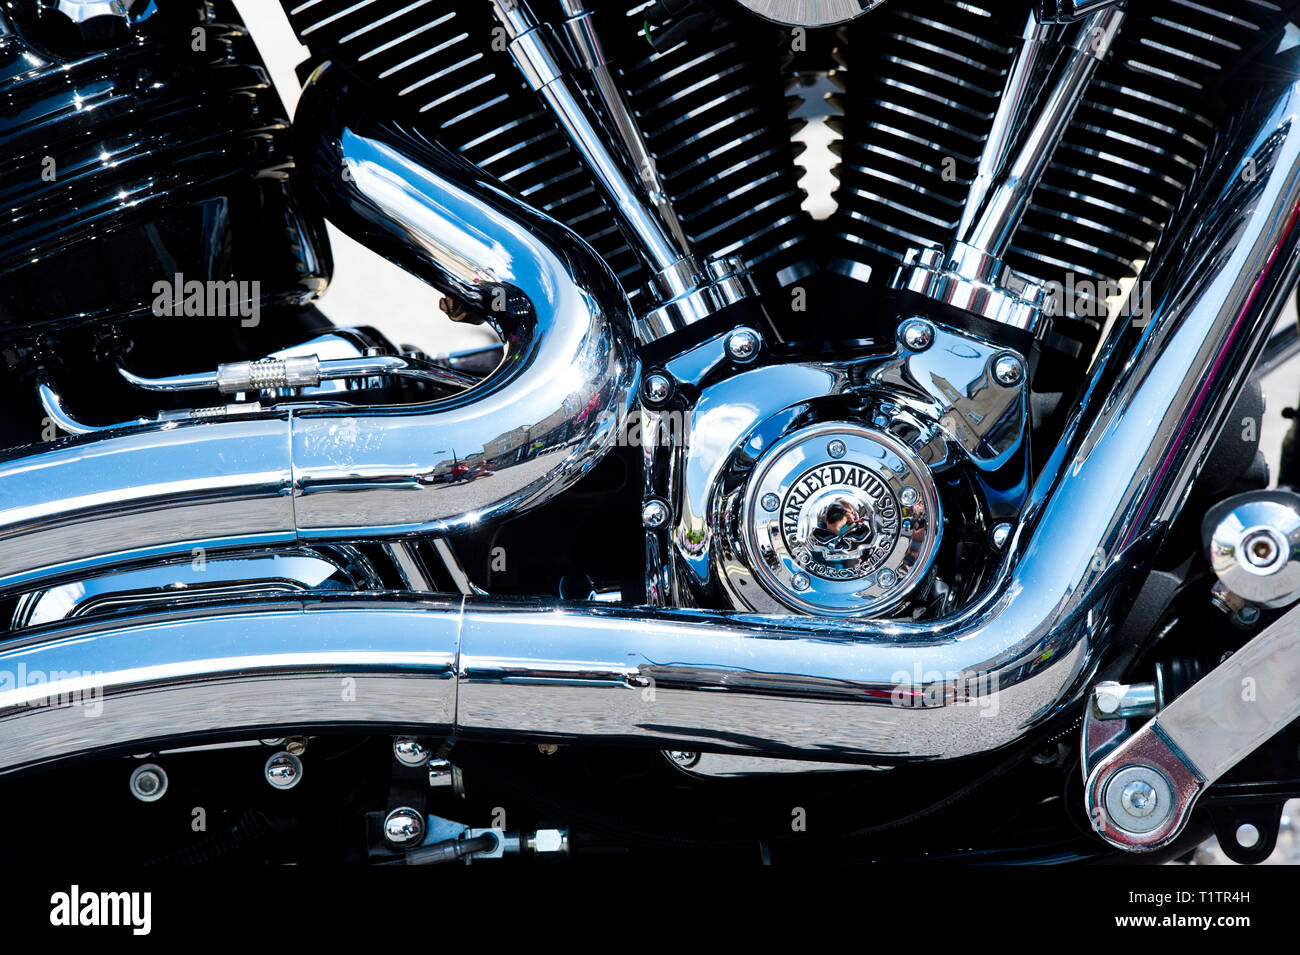 Harley Davidson v twin motorcycle engine Stock Photo